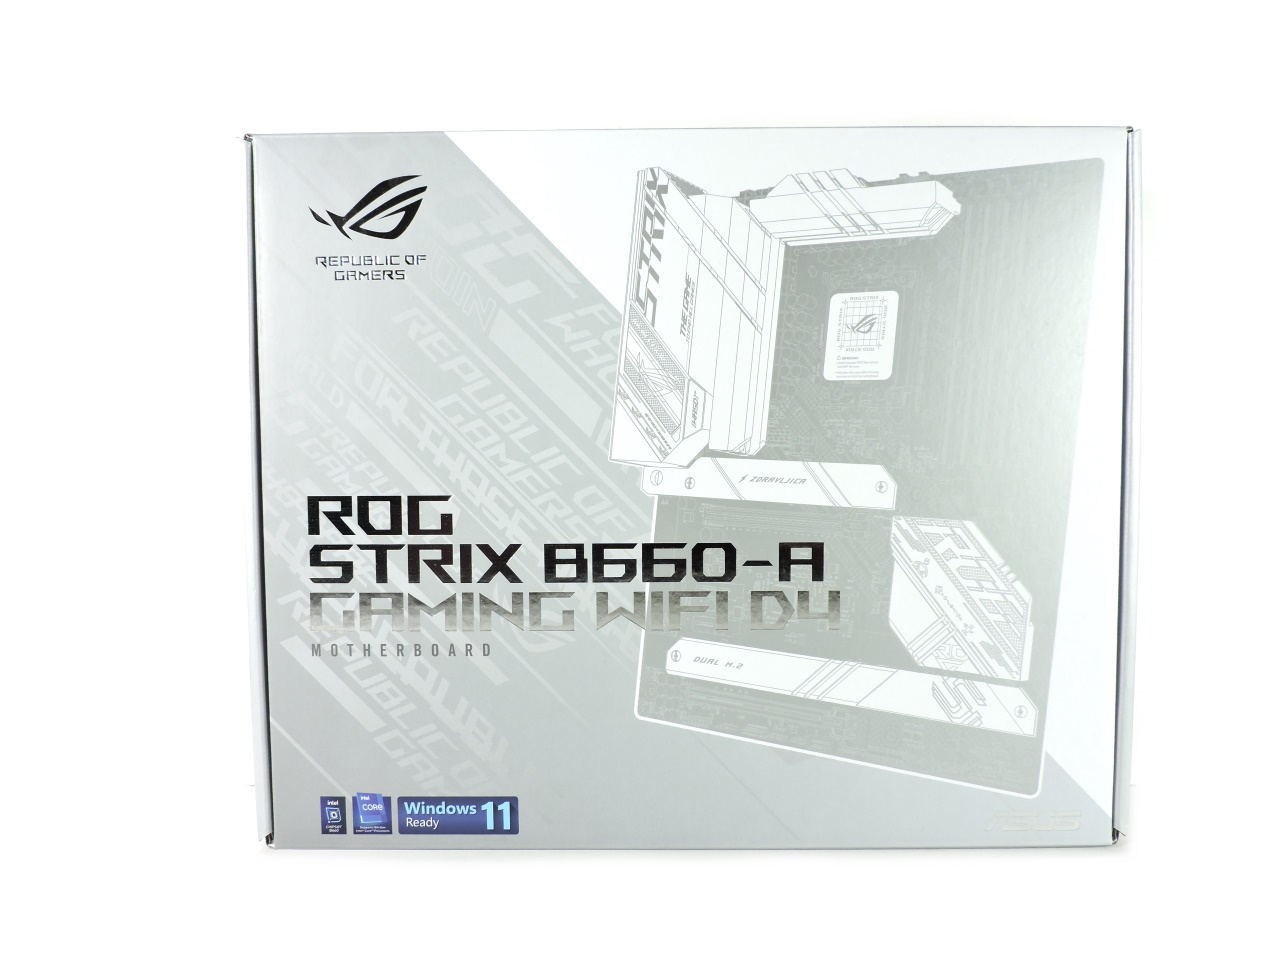 Asus ROG Strix B660-A Gaming WIFI D4 Review: Sweet-Sounding Budget Bird